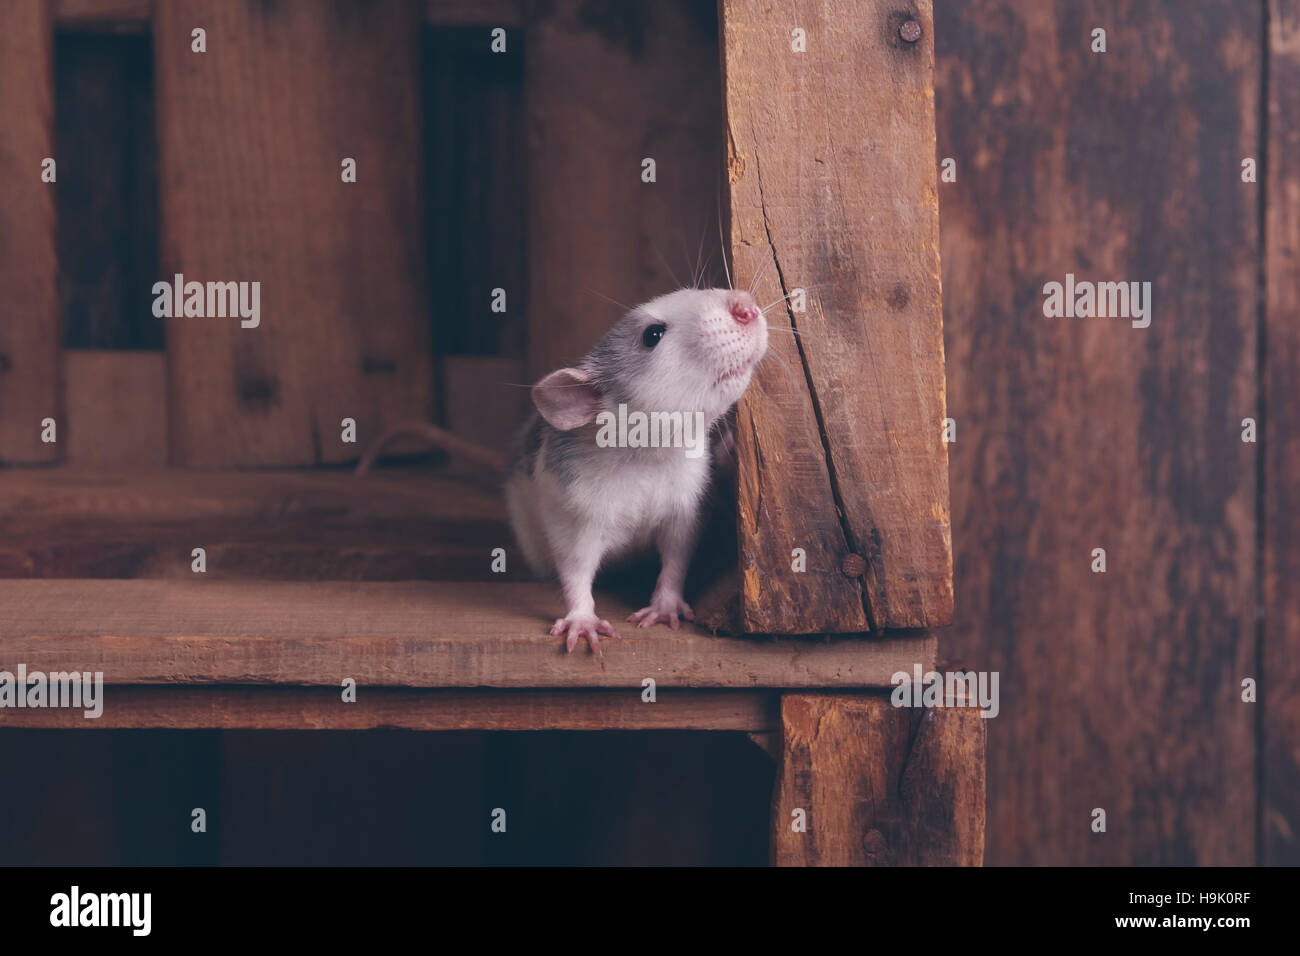 Pet rat in wooden box Stock Photo